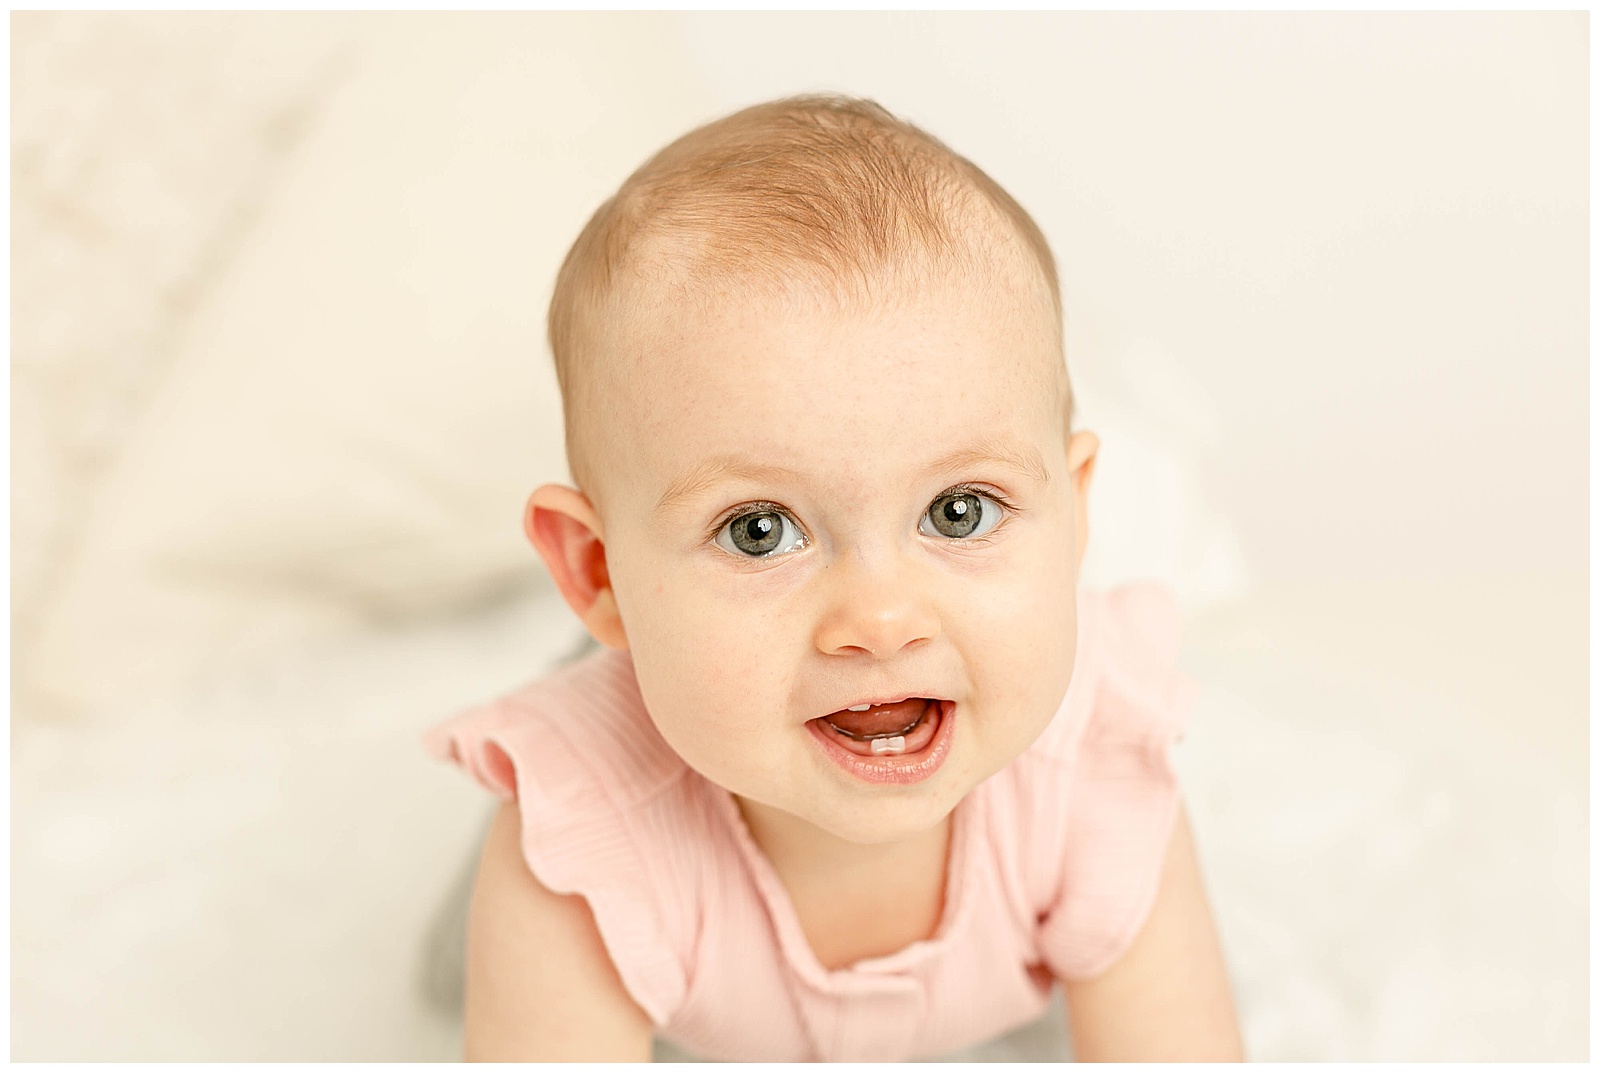 Baby crawing towards camera during milestone photo session